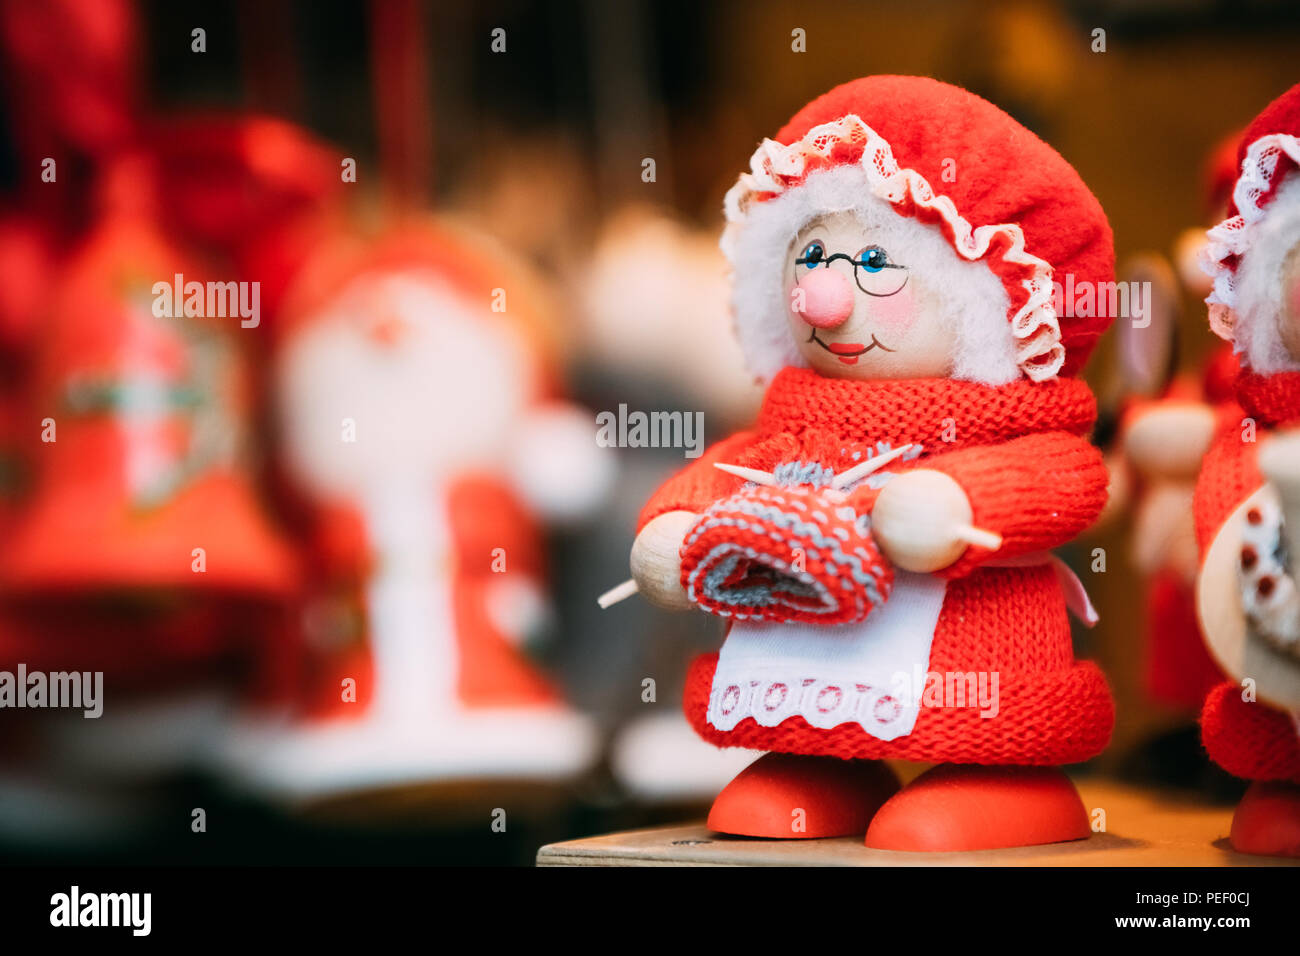 Tallinn, Estonia - December 2, 2016: Traditional Souvenirs Grandmother Wooden Doll Toy At European Winter Christmas Market. New Year Wooden Souvenir F Stock Photo